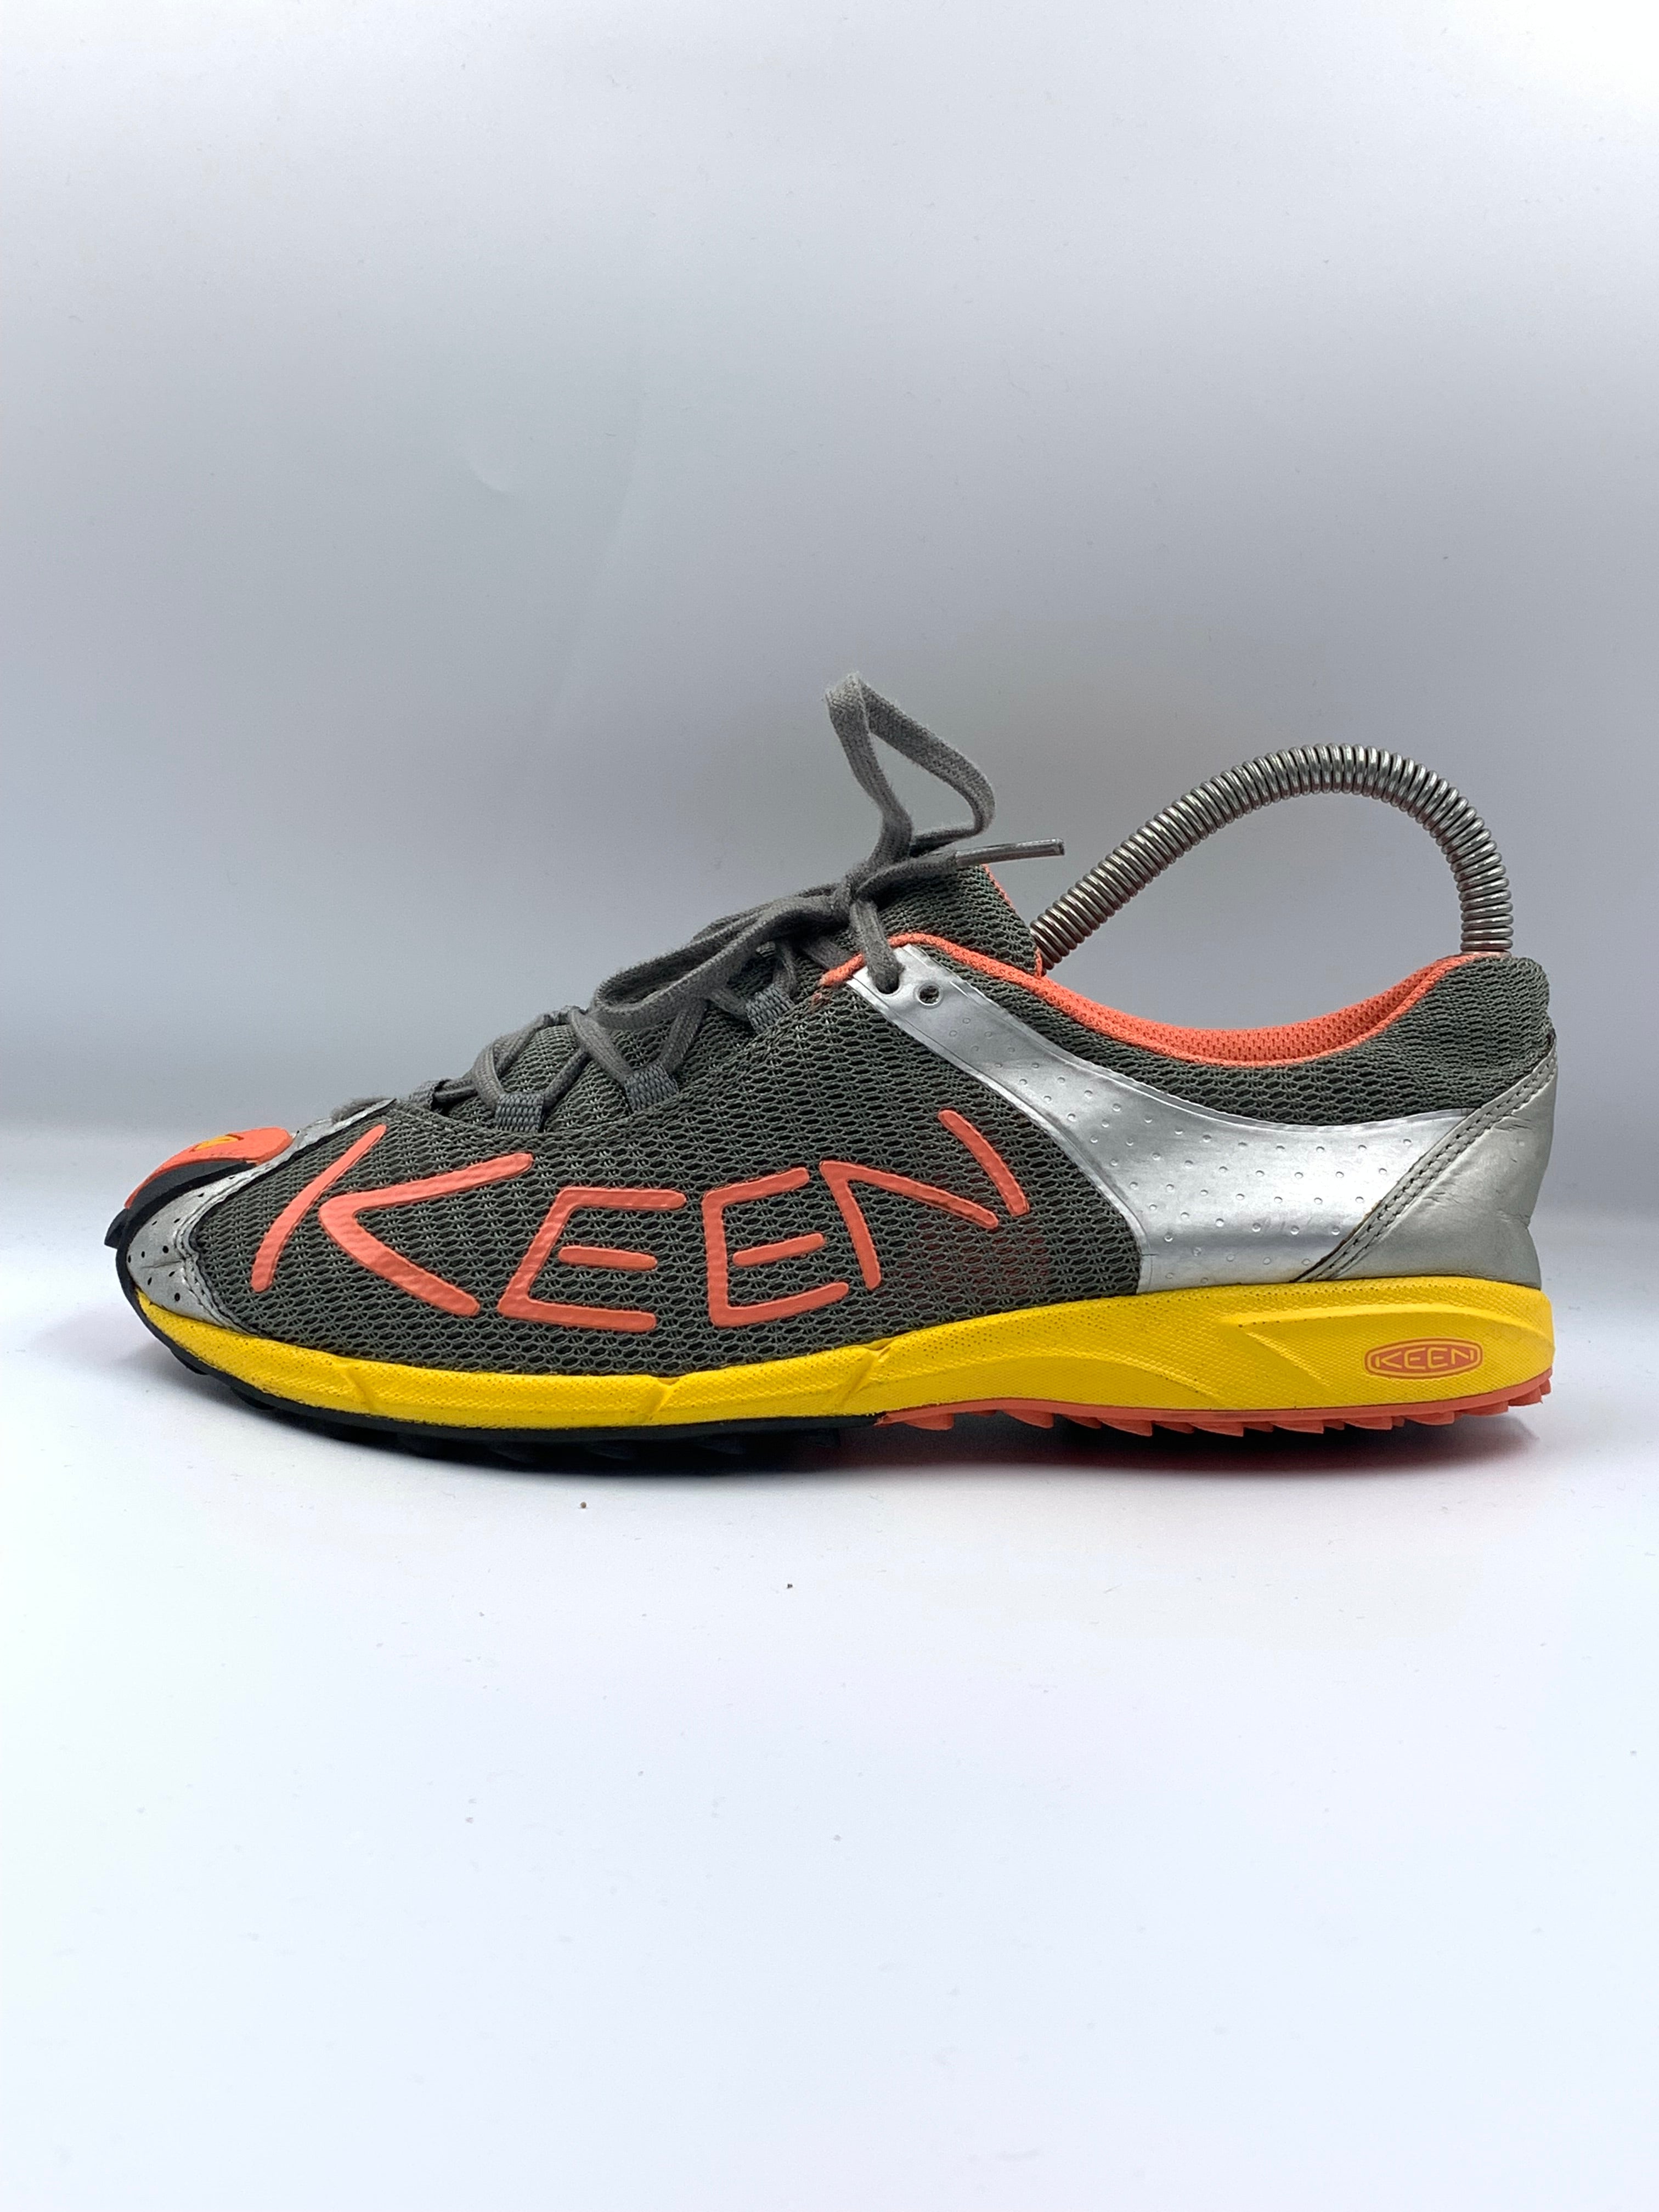 Keen Original Brand Sports Gray Running For Women Shoes